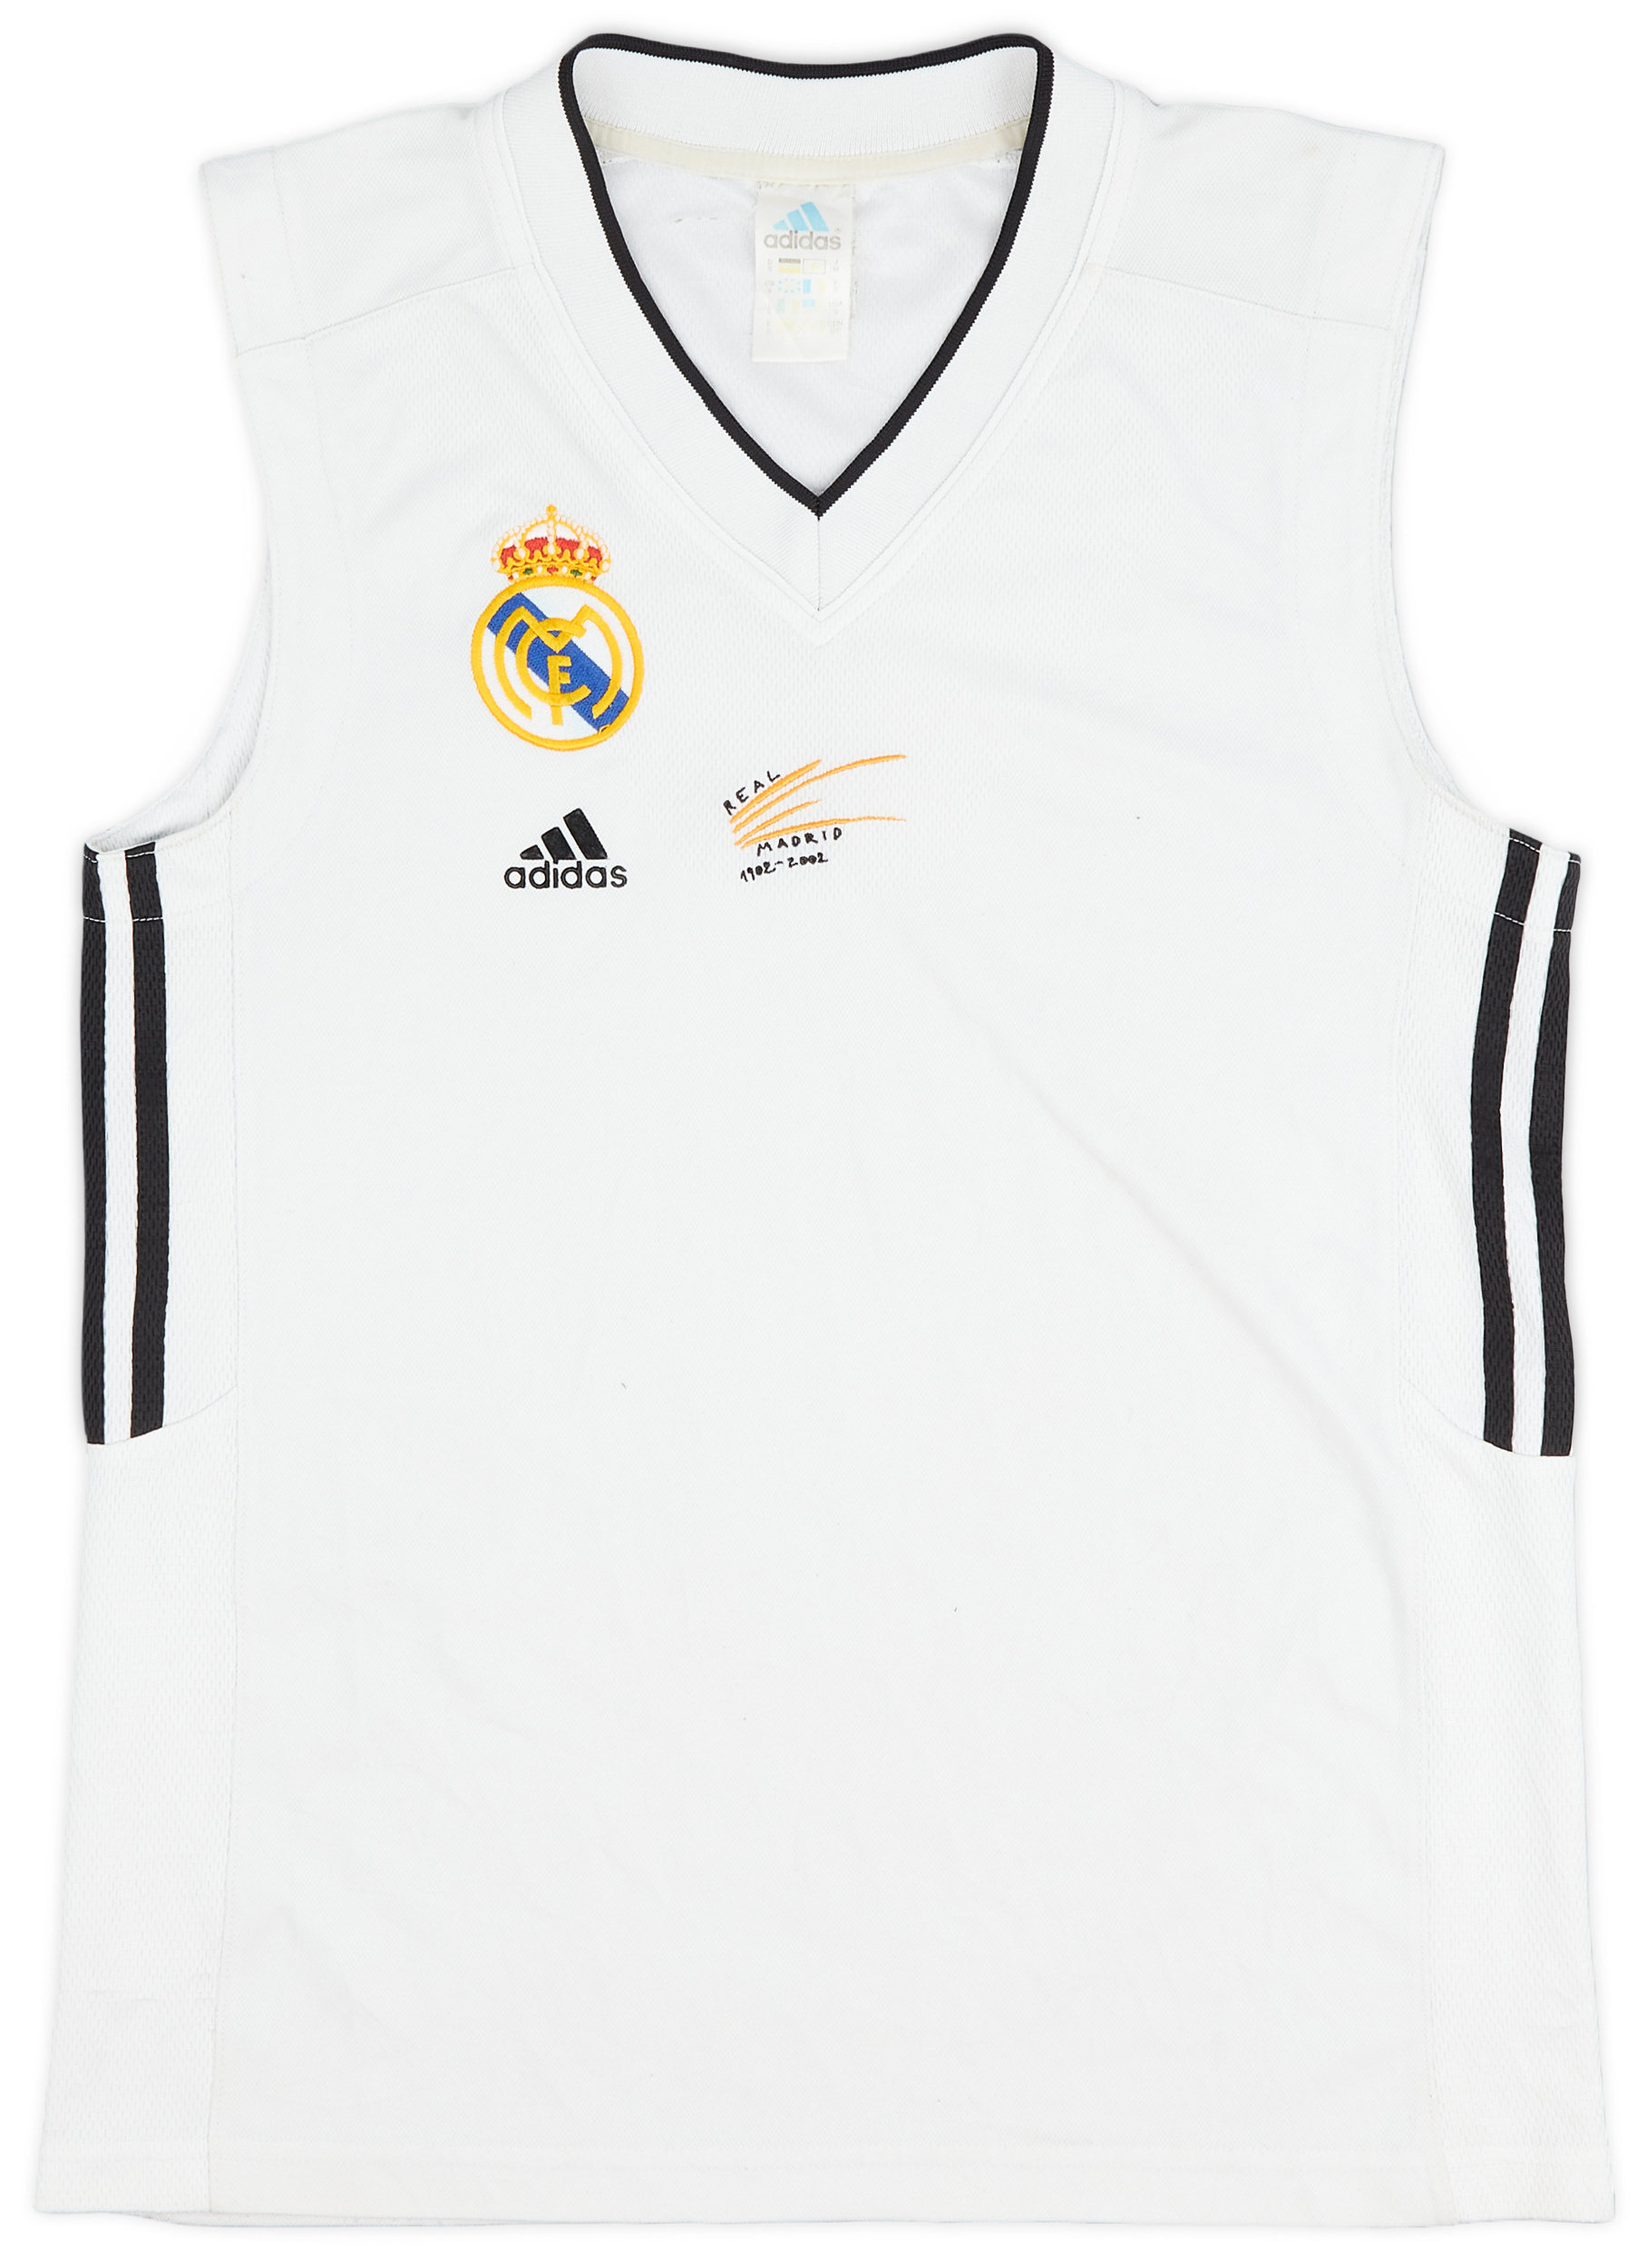 2001-02 Real Madrid adidas Basketball Jersey - 5/10 - ()